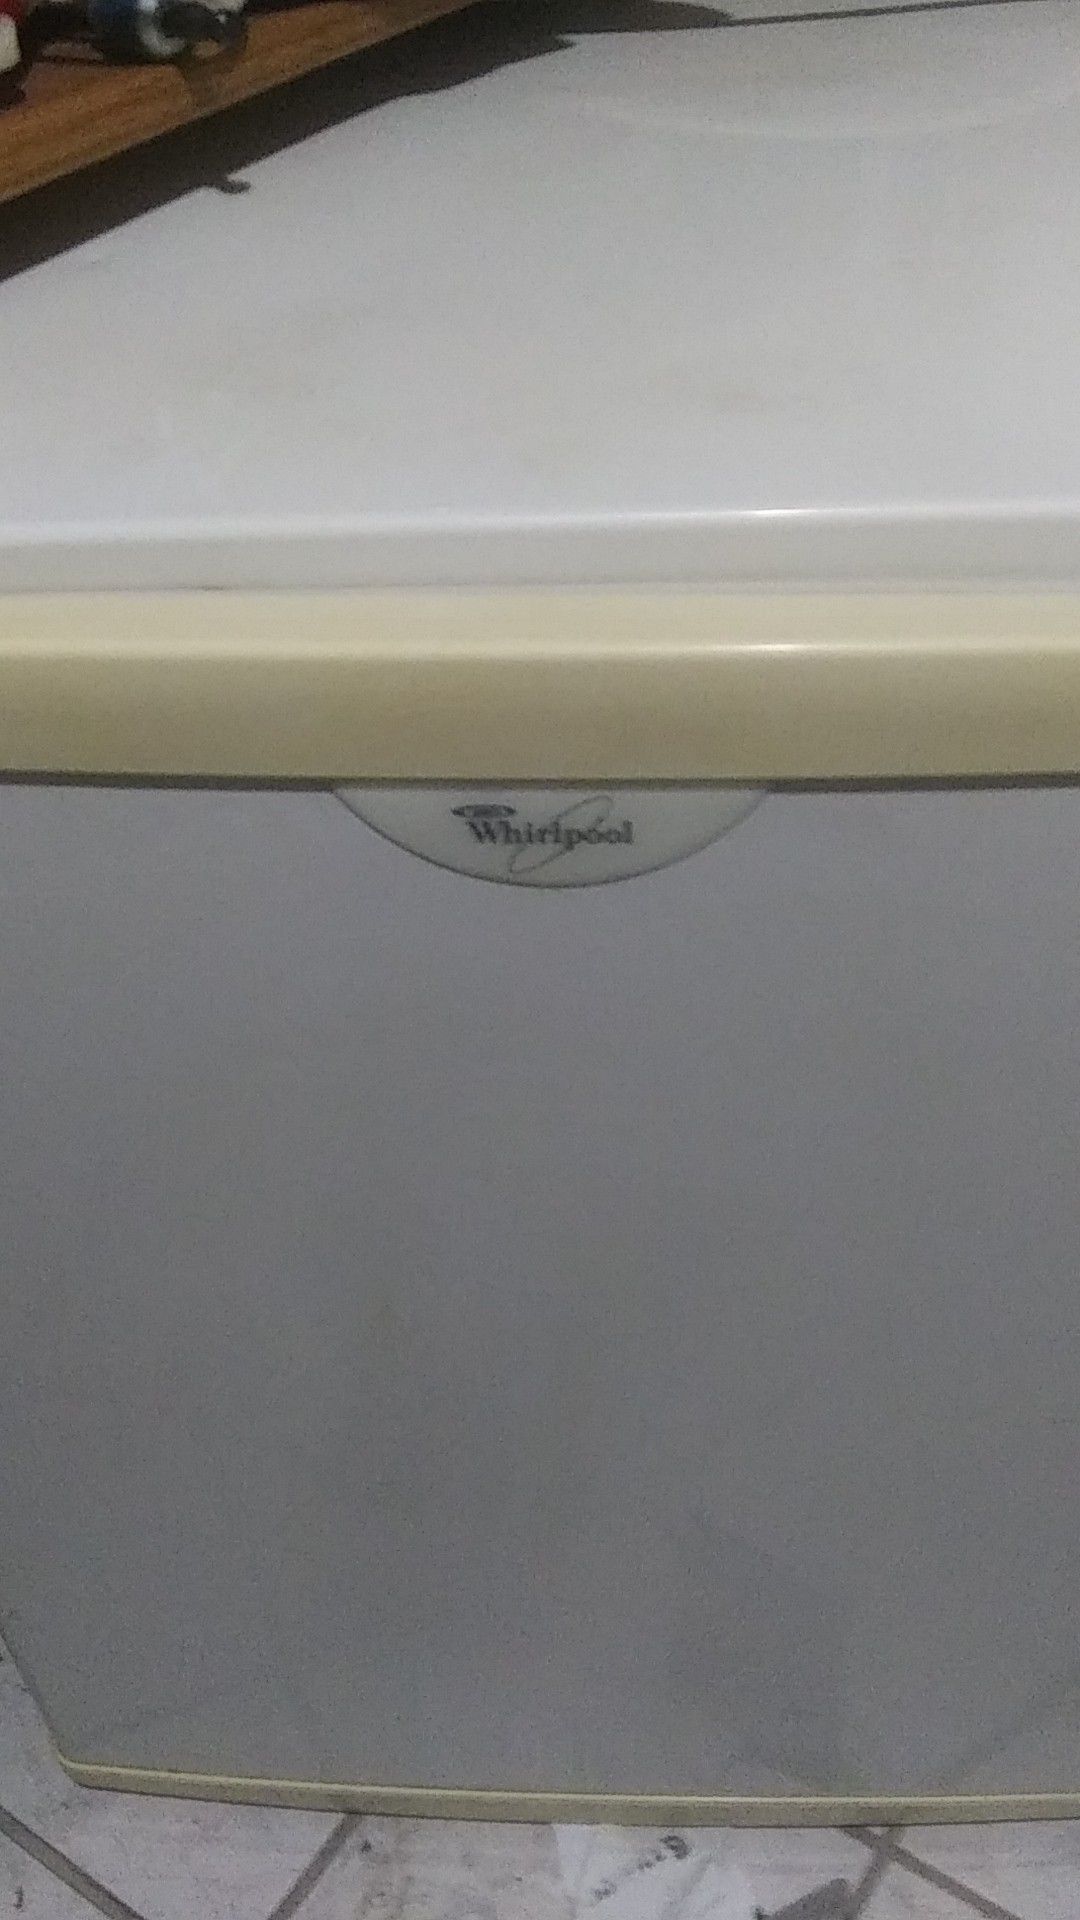 Whirlpool mini fridge